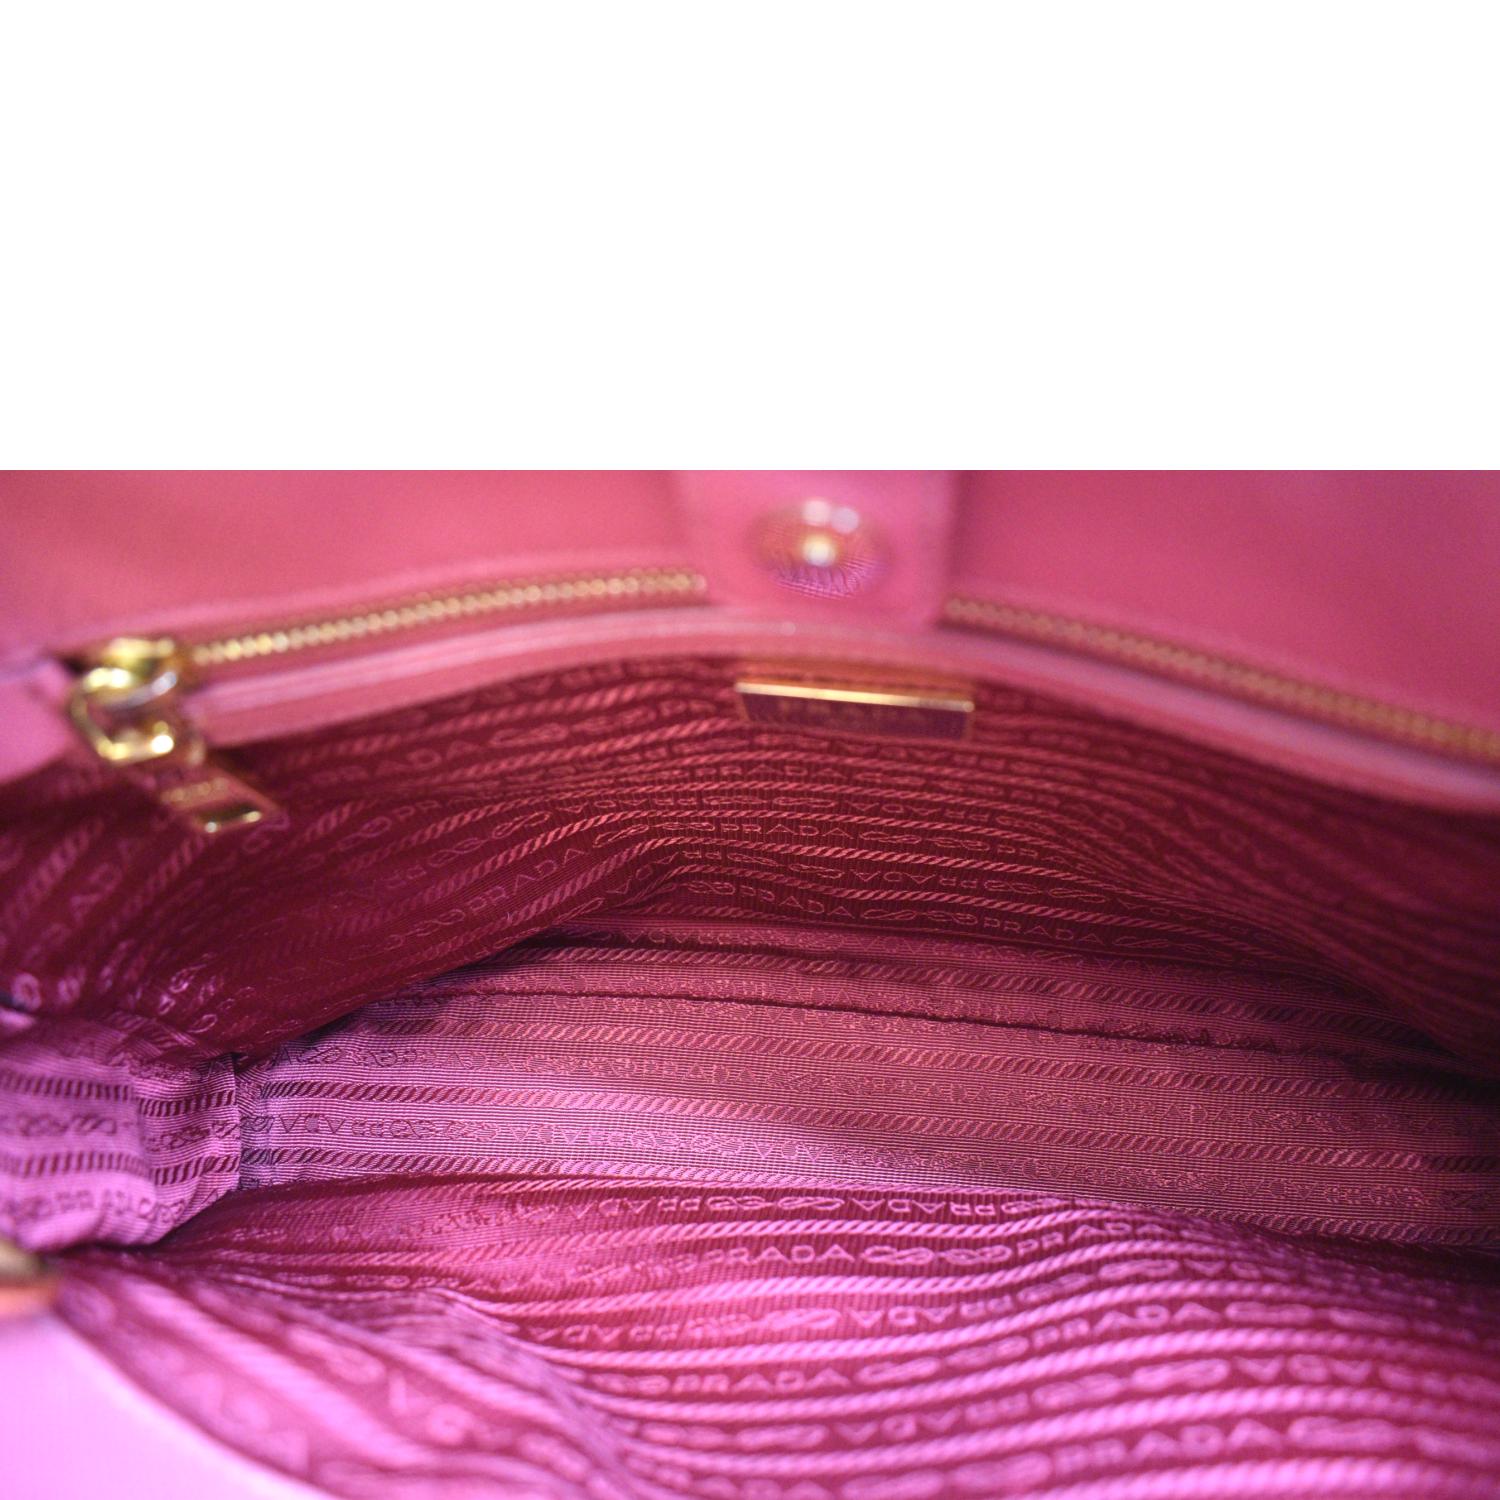 Galleria leather handbag Prada Pink in Leather - 14192372